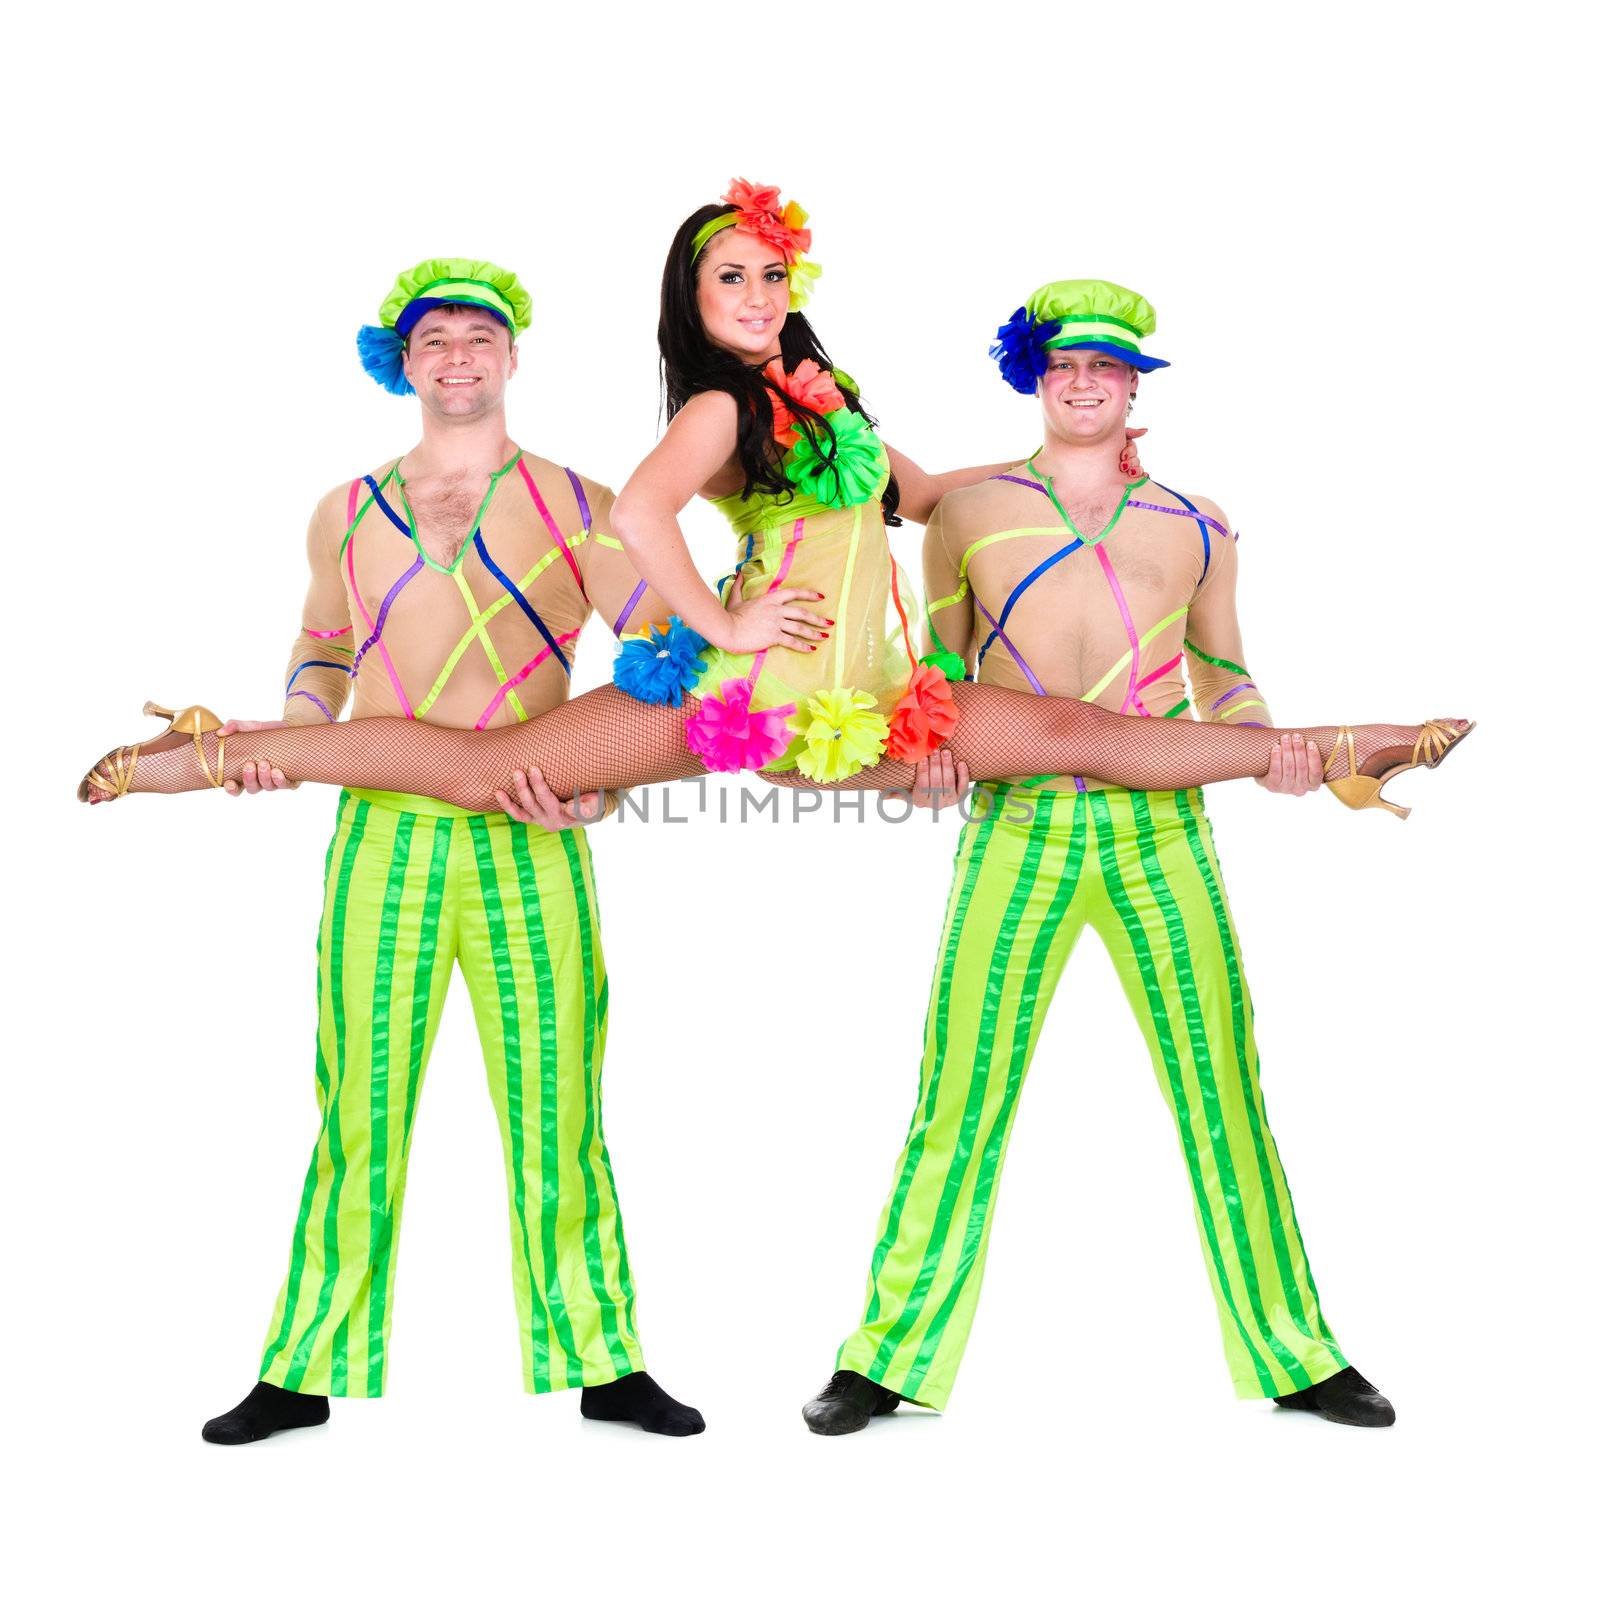 acrobat carnival dancers doing splits against isolated white background